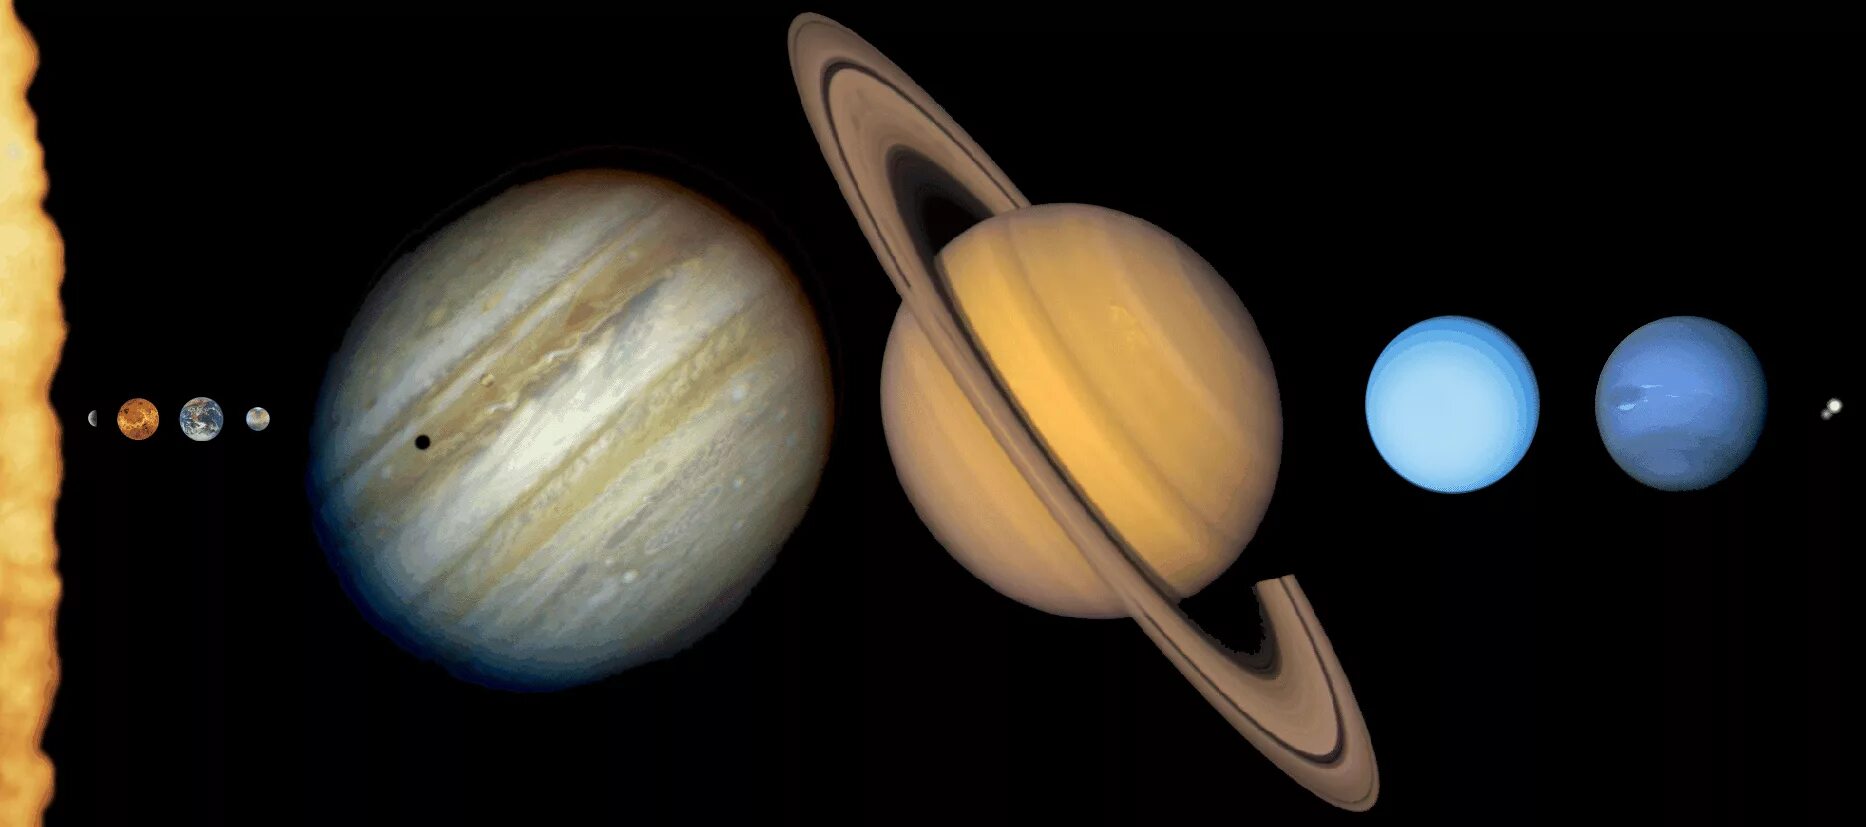 Снимки Сатурна Вояджер. Планеты гиганты Юпитер Уран. Земля Нептун Уран Сатурн Юпитер. Марс Юпитер Сатурн Уран Нептун. Сатурн земная группа